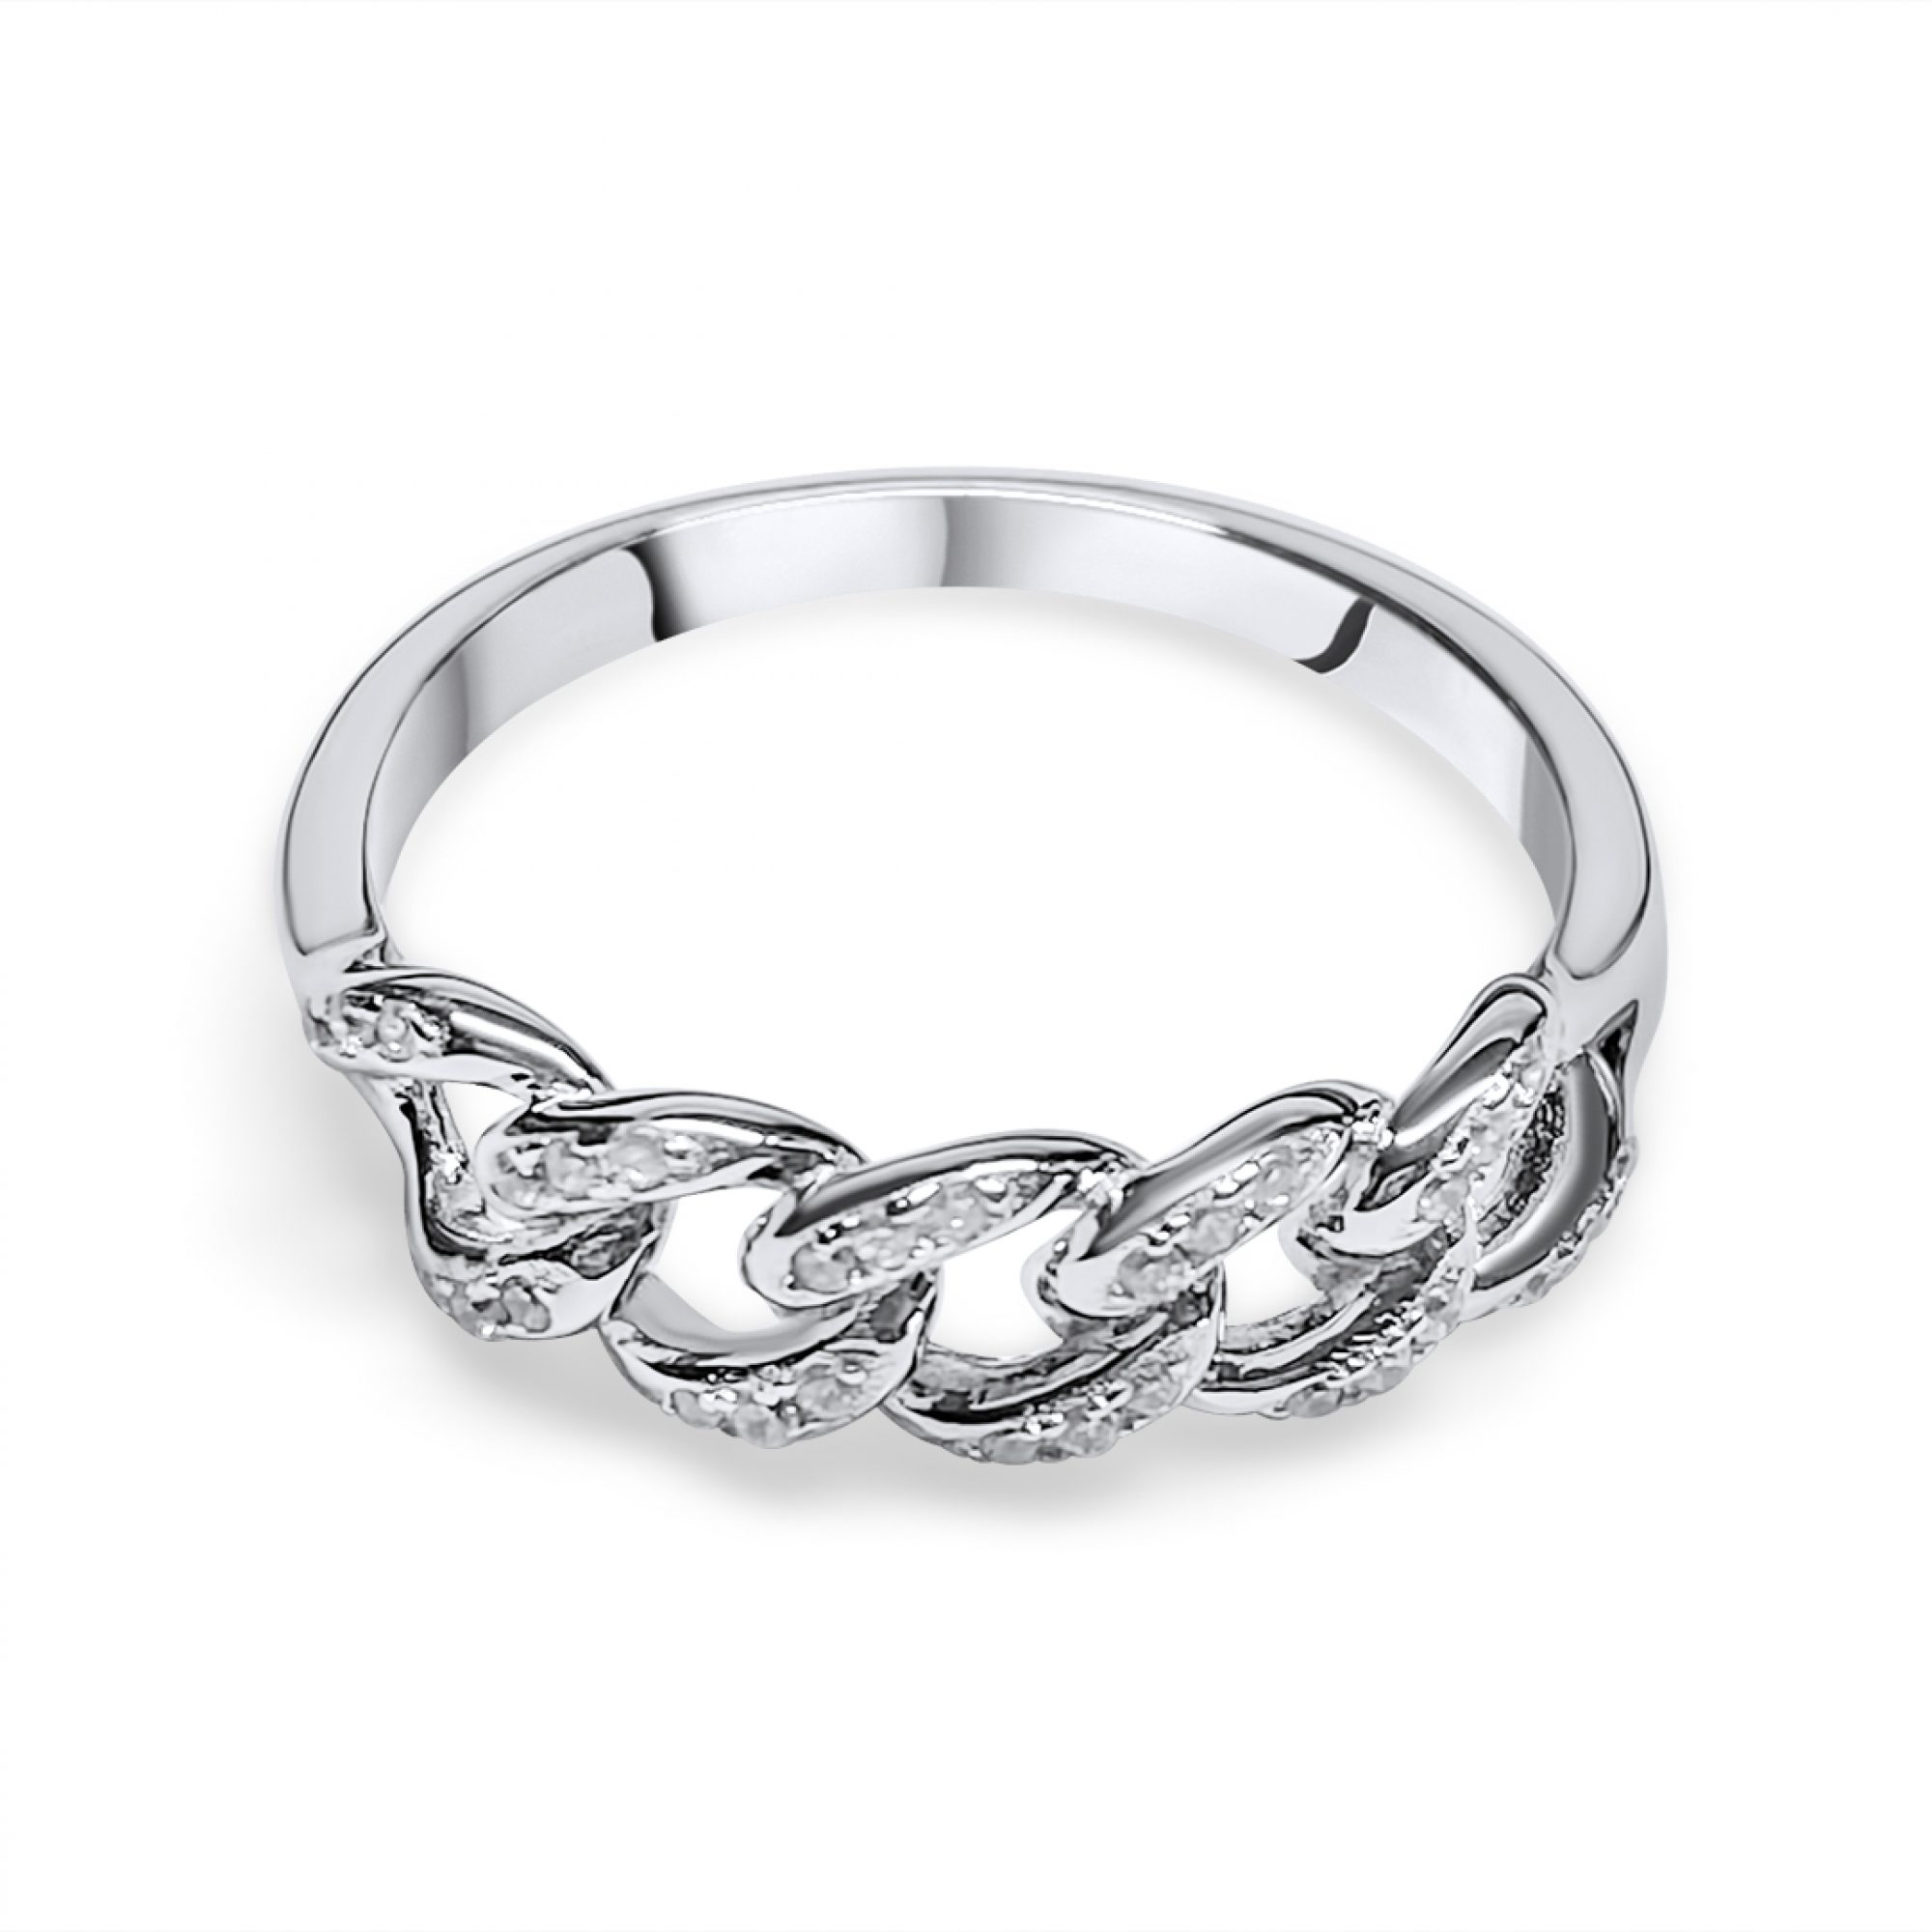 Chain ring with zircon stones